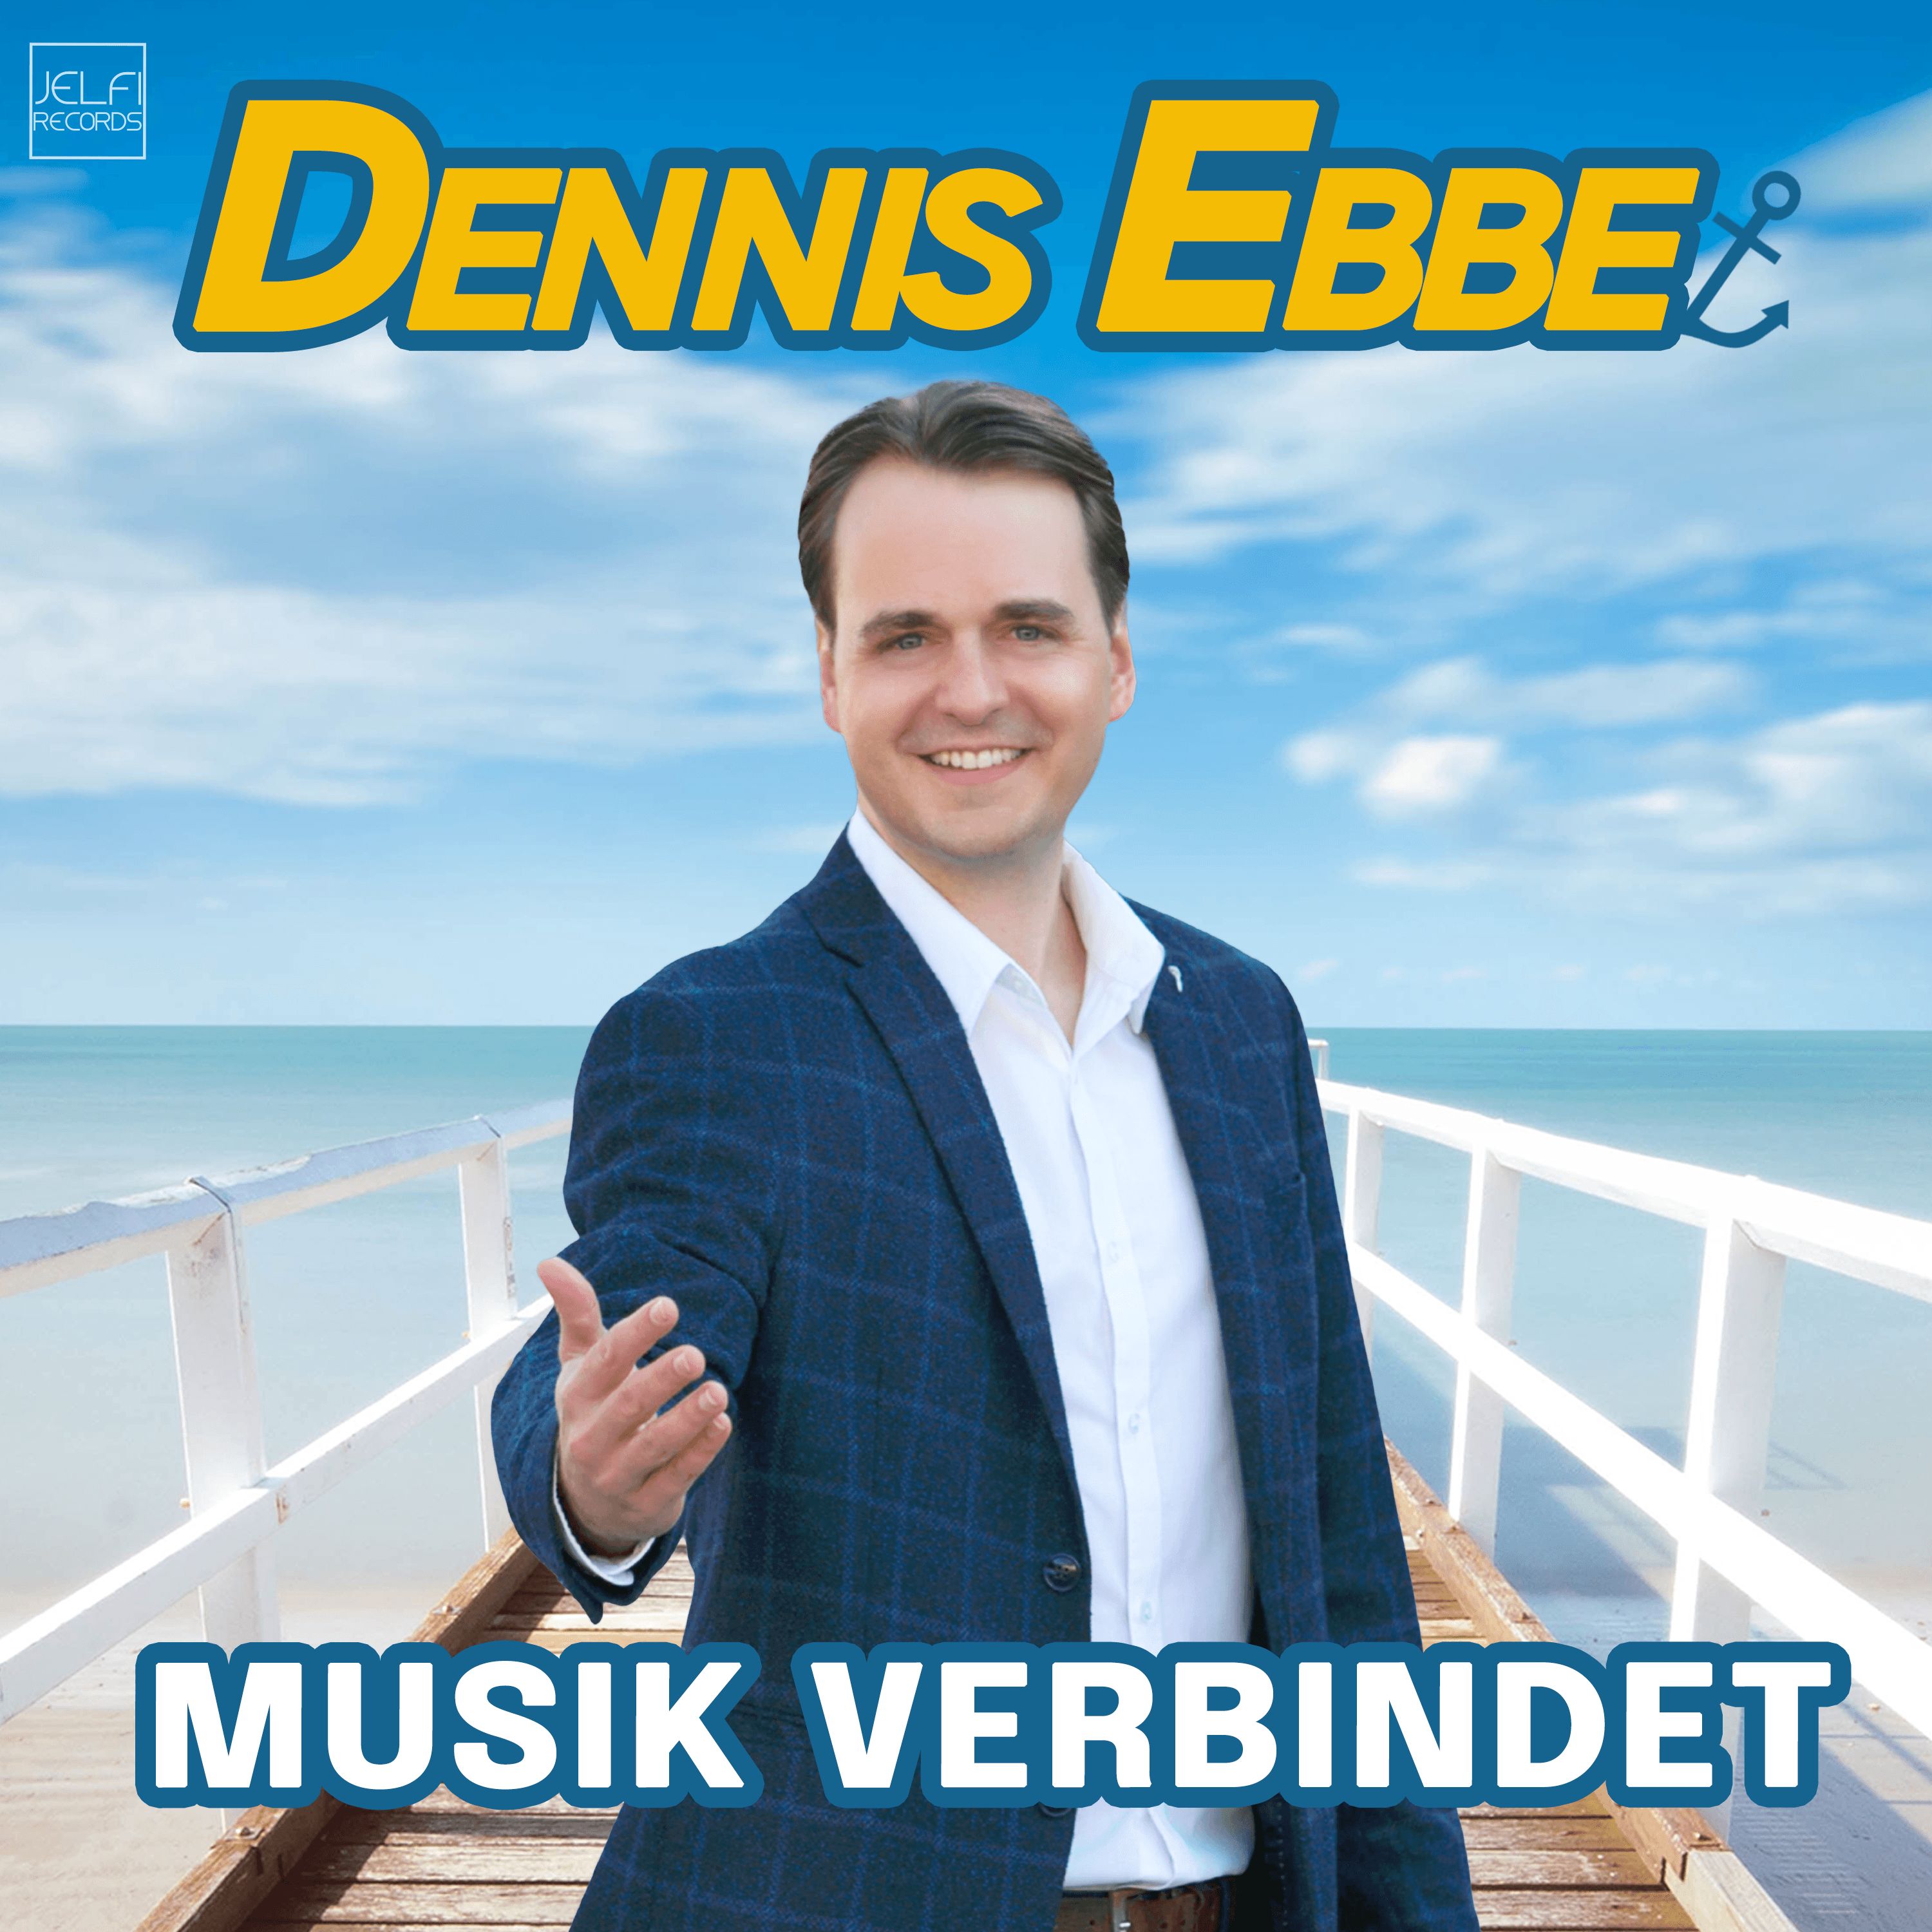 Dennis Ebbe - Musik verbindet - Cover.jpg